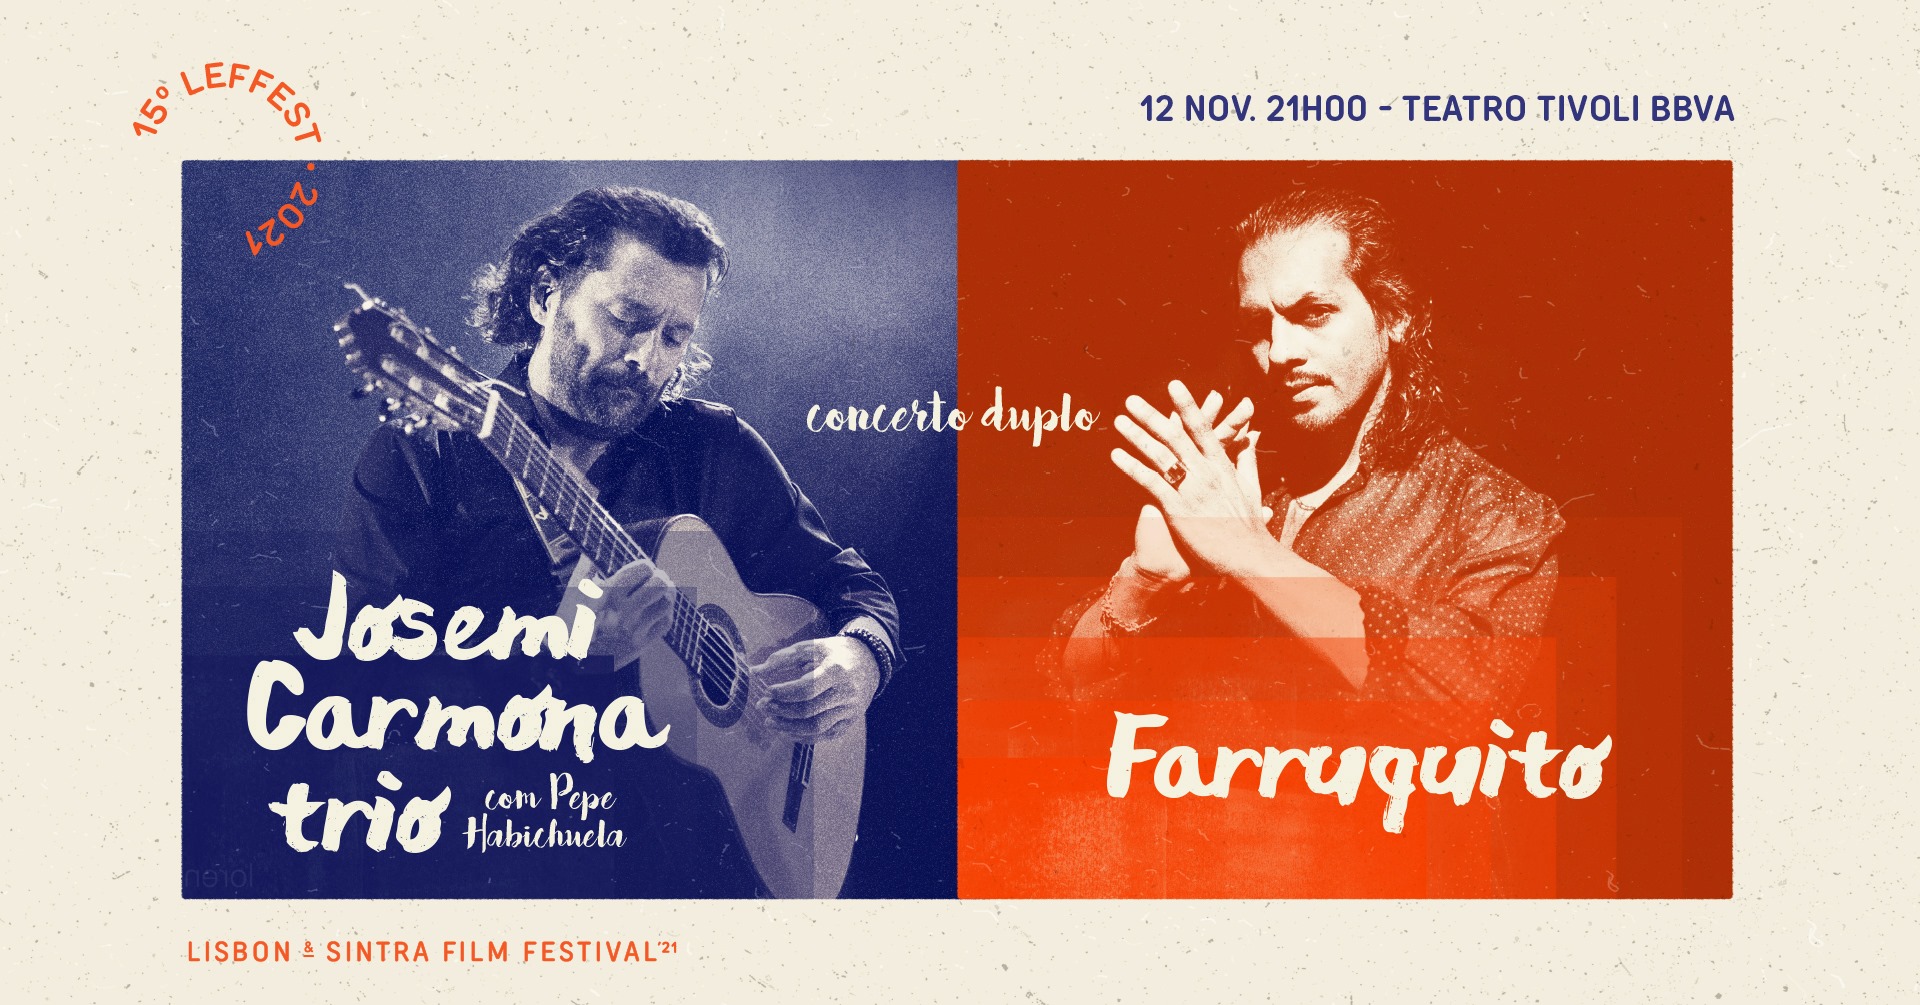 15ºLEFFEST - Concerto Duplo | Josemi Carmona Trio (e artista convidado Pepe Habichuela) + Farruquito